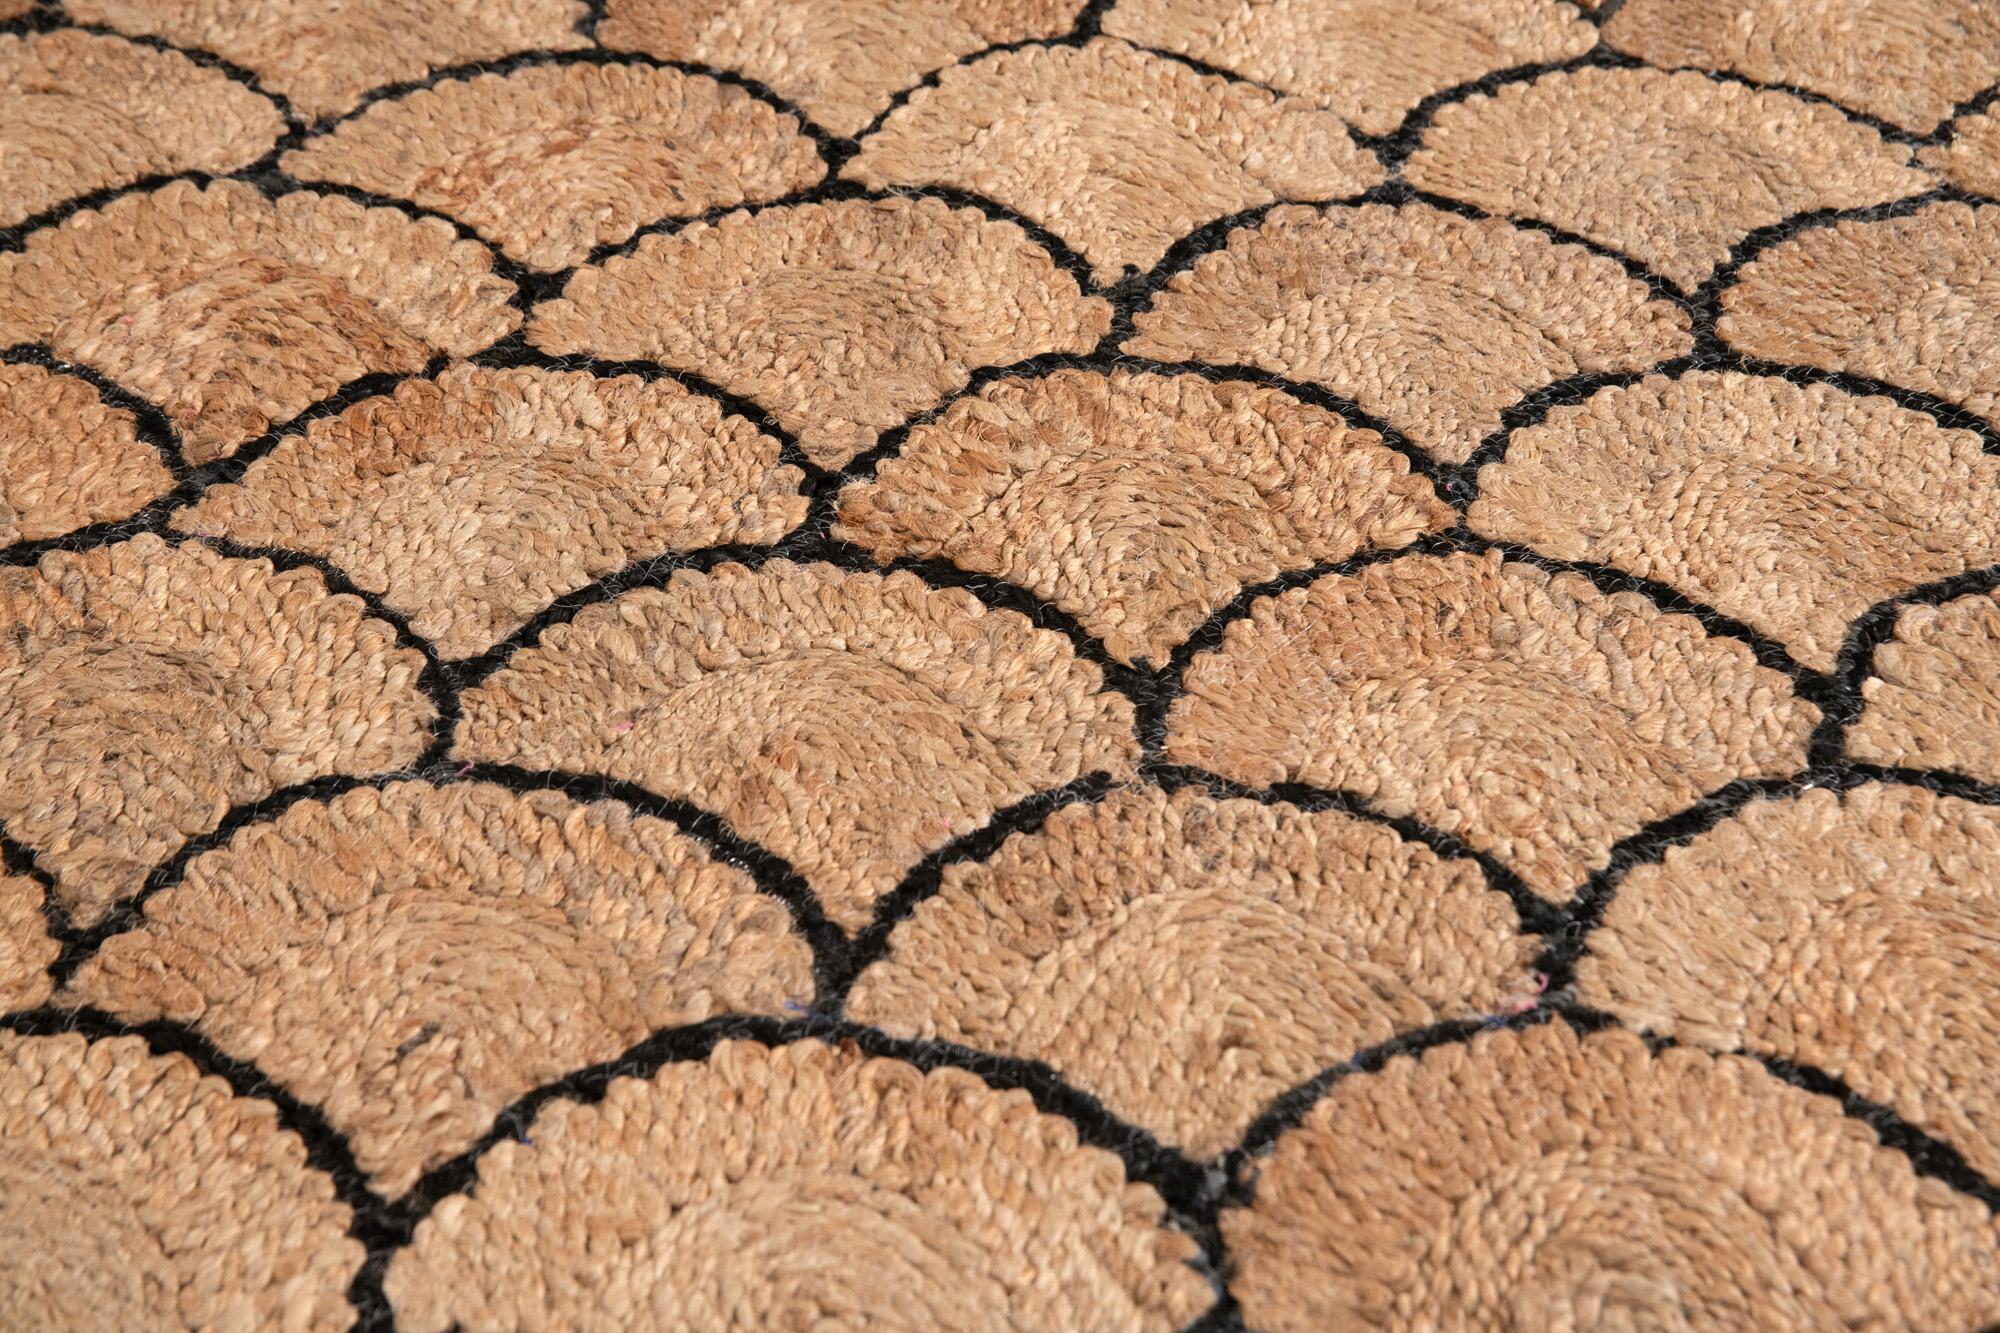 Modern Machine Stitched Jute Carpet Rug Natural Brown & Black Venus For Sale 8